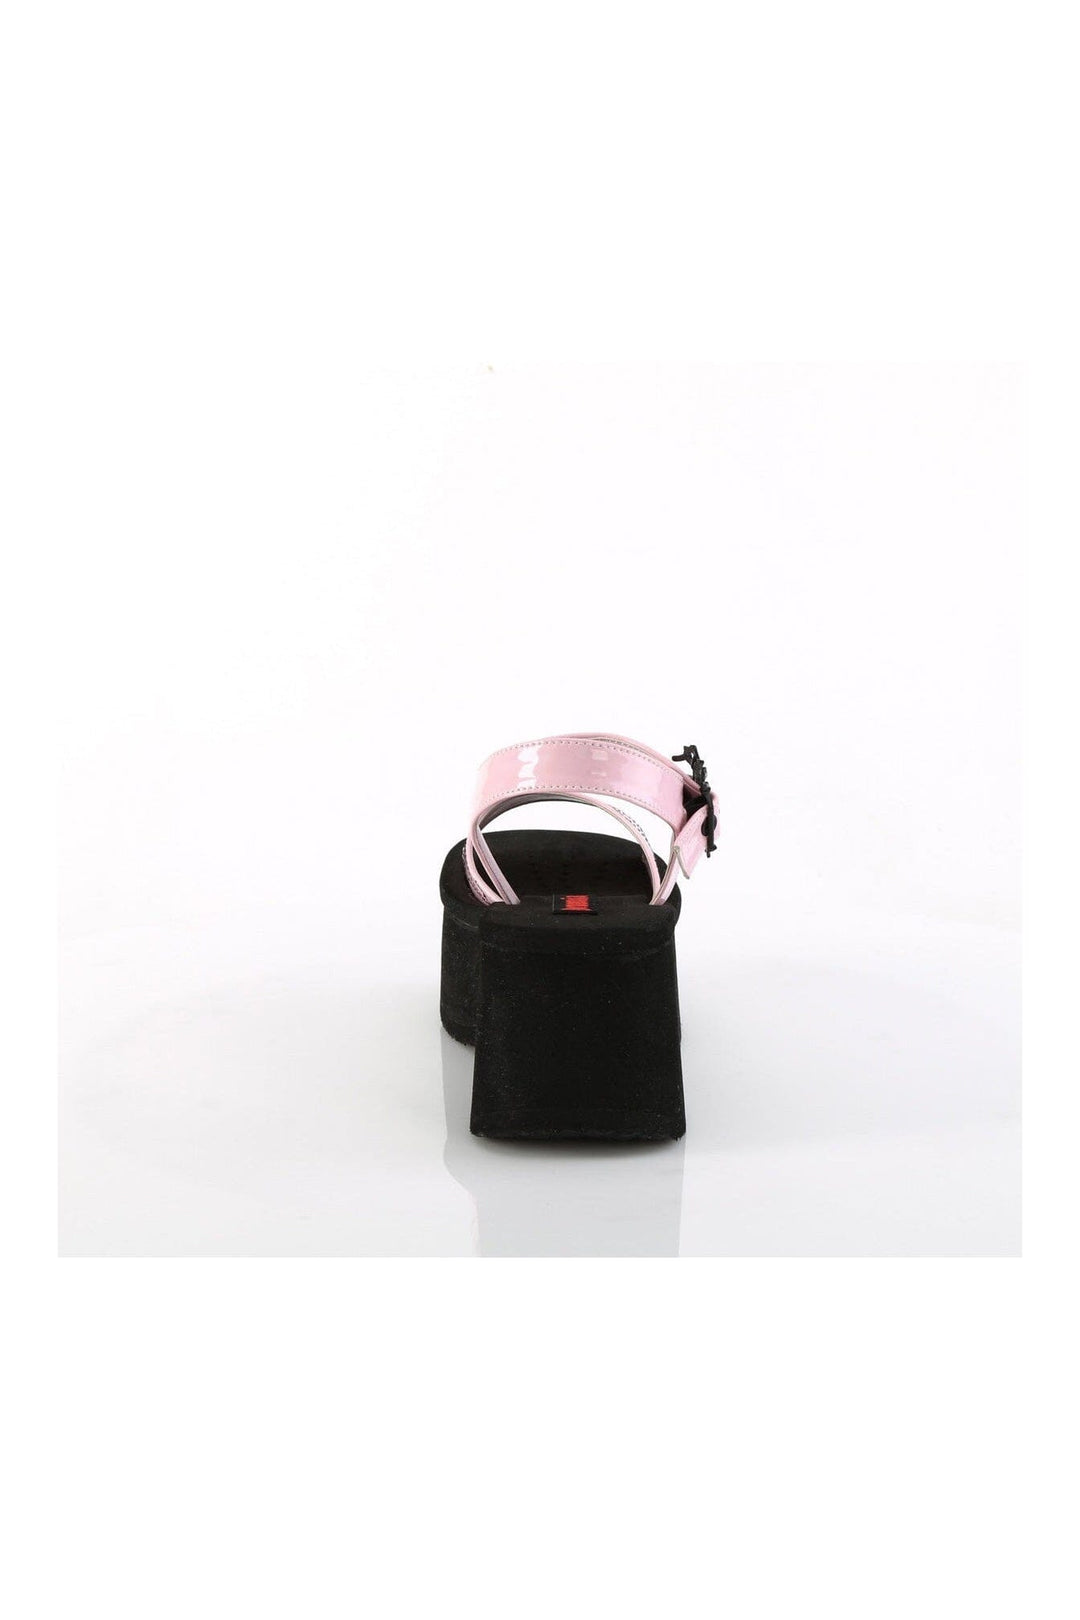 FUNN-10 Pink Hologram Patent Sandal-Sandals-Demonia-SEXYSHOES.COM